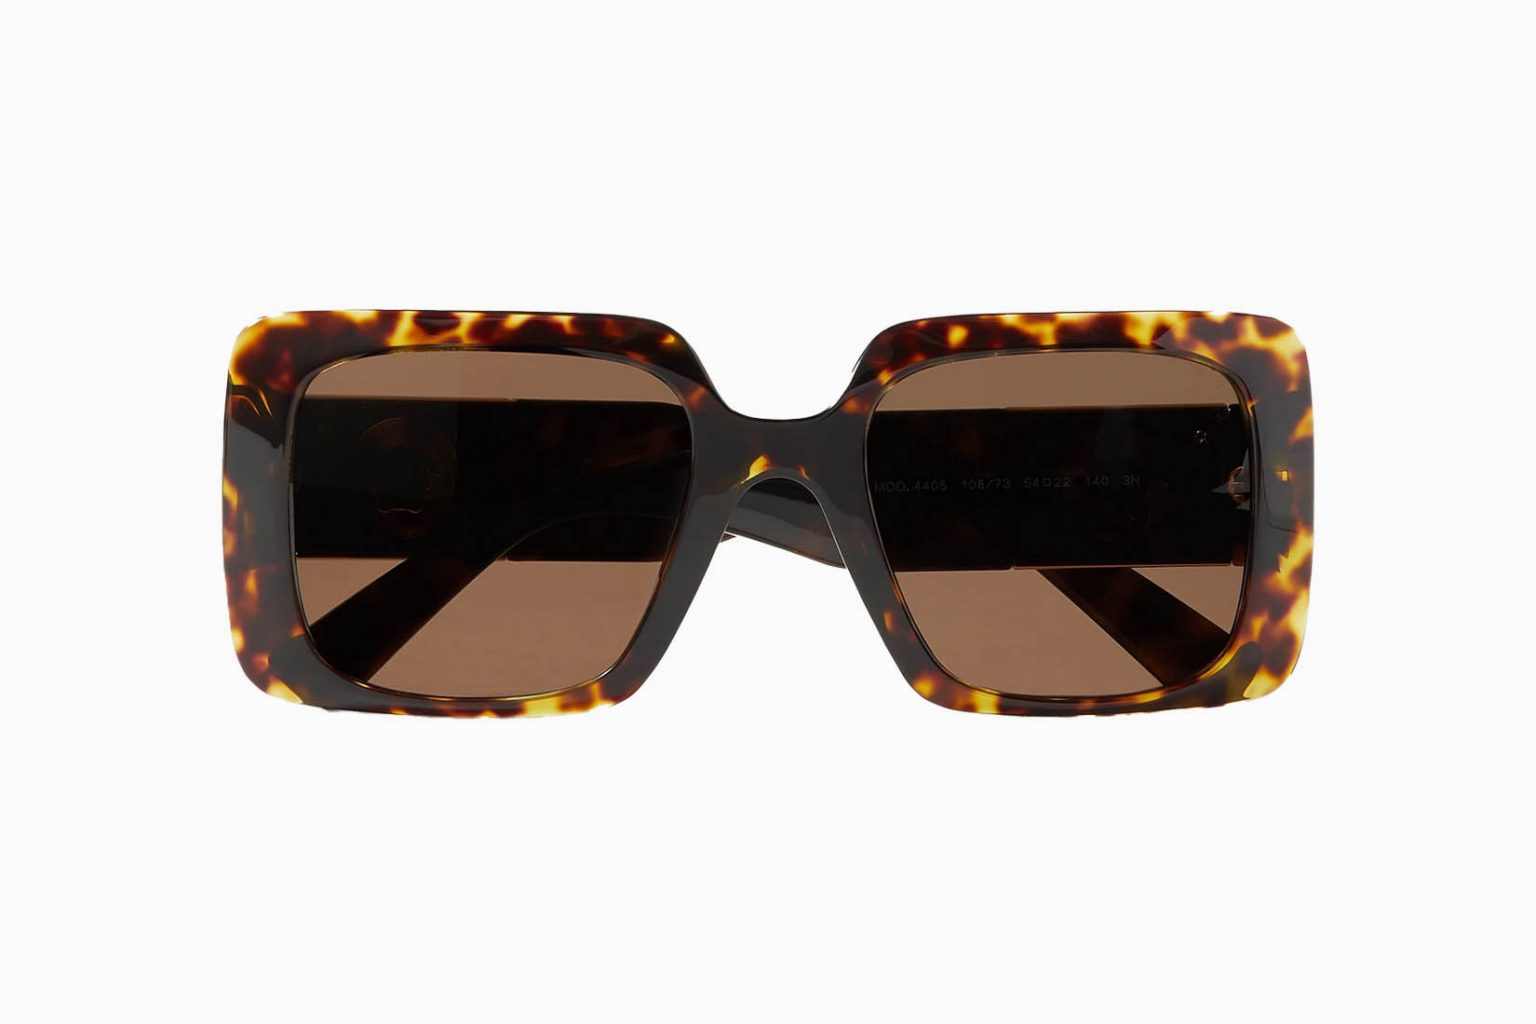 19 Best Sunglasses For Women: Designer Sunglasses Edition (2021)